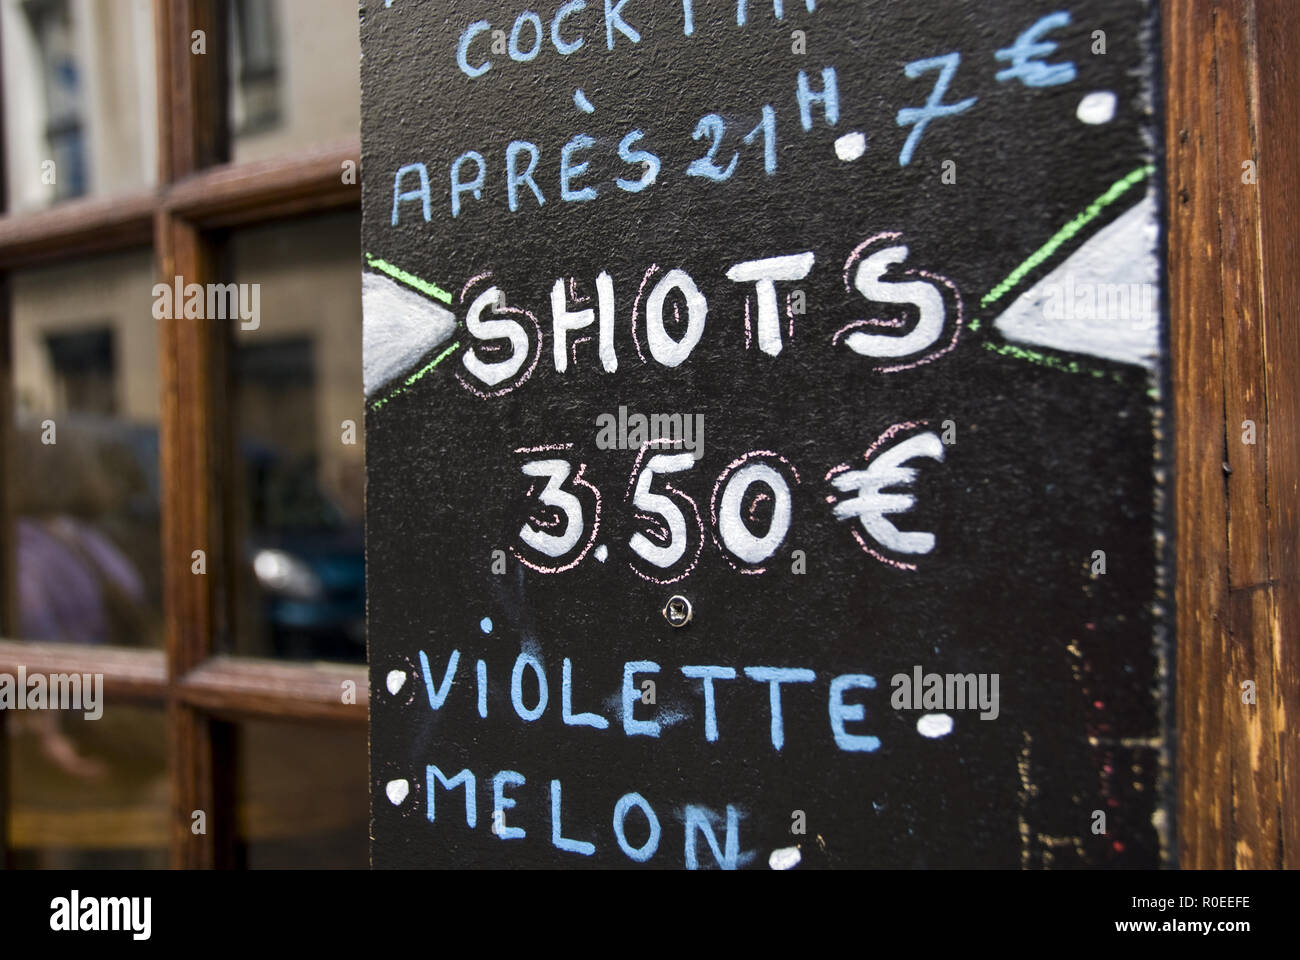 A sign offers 'shots' at a bar on Rue Mouffetard, Paris, France. Stock Photo